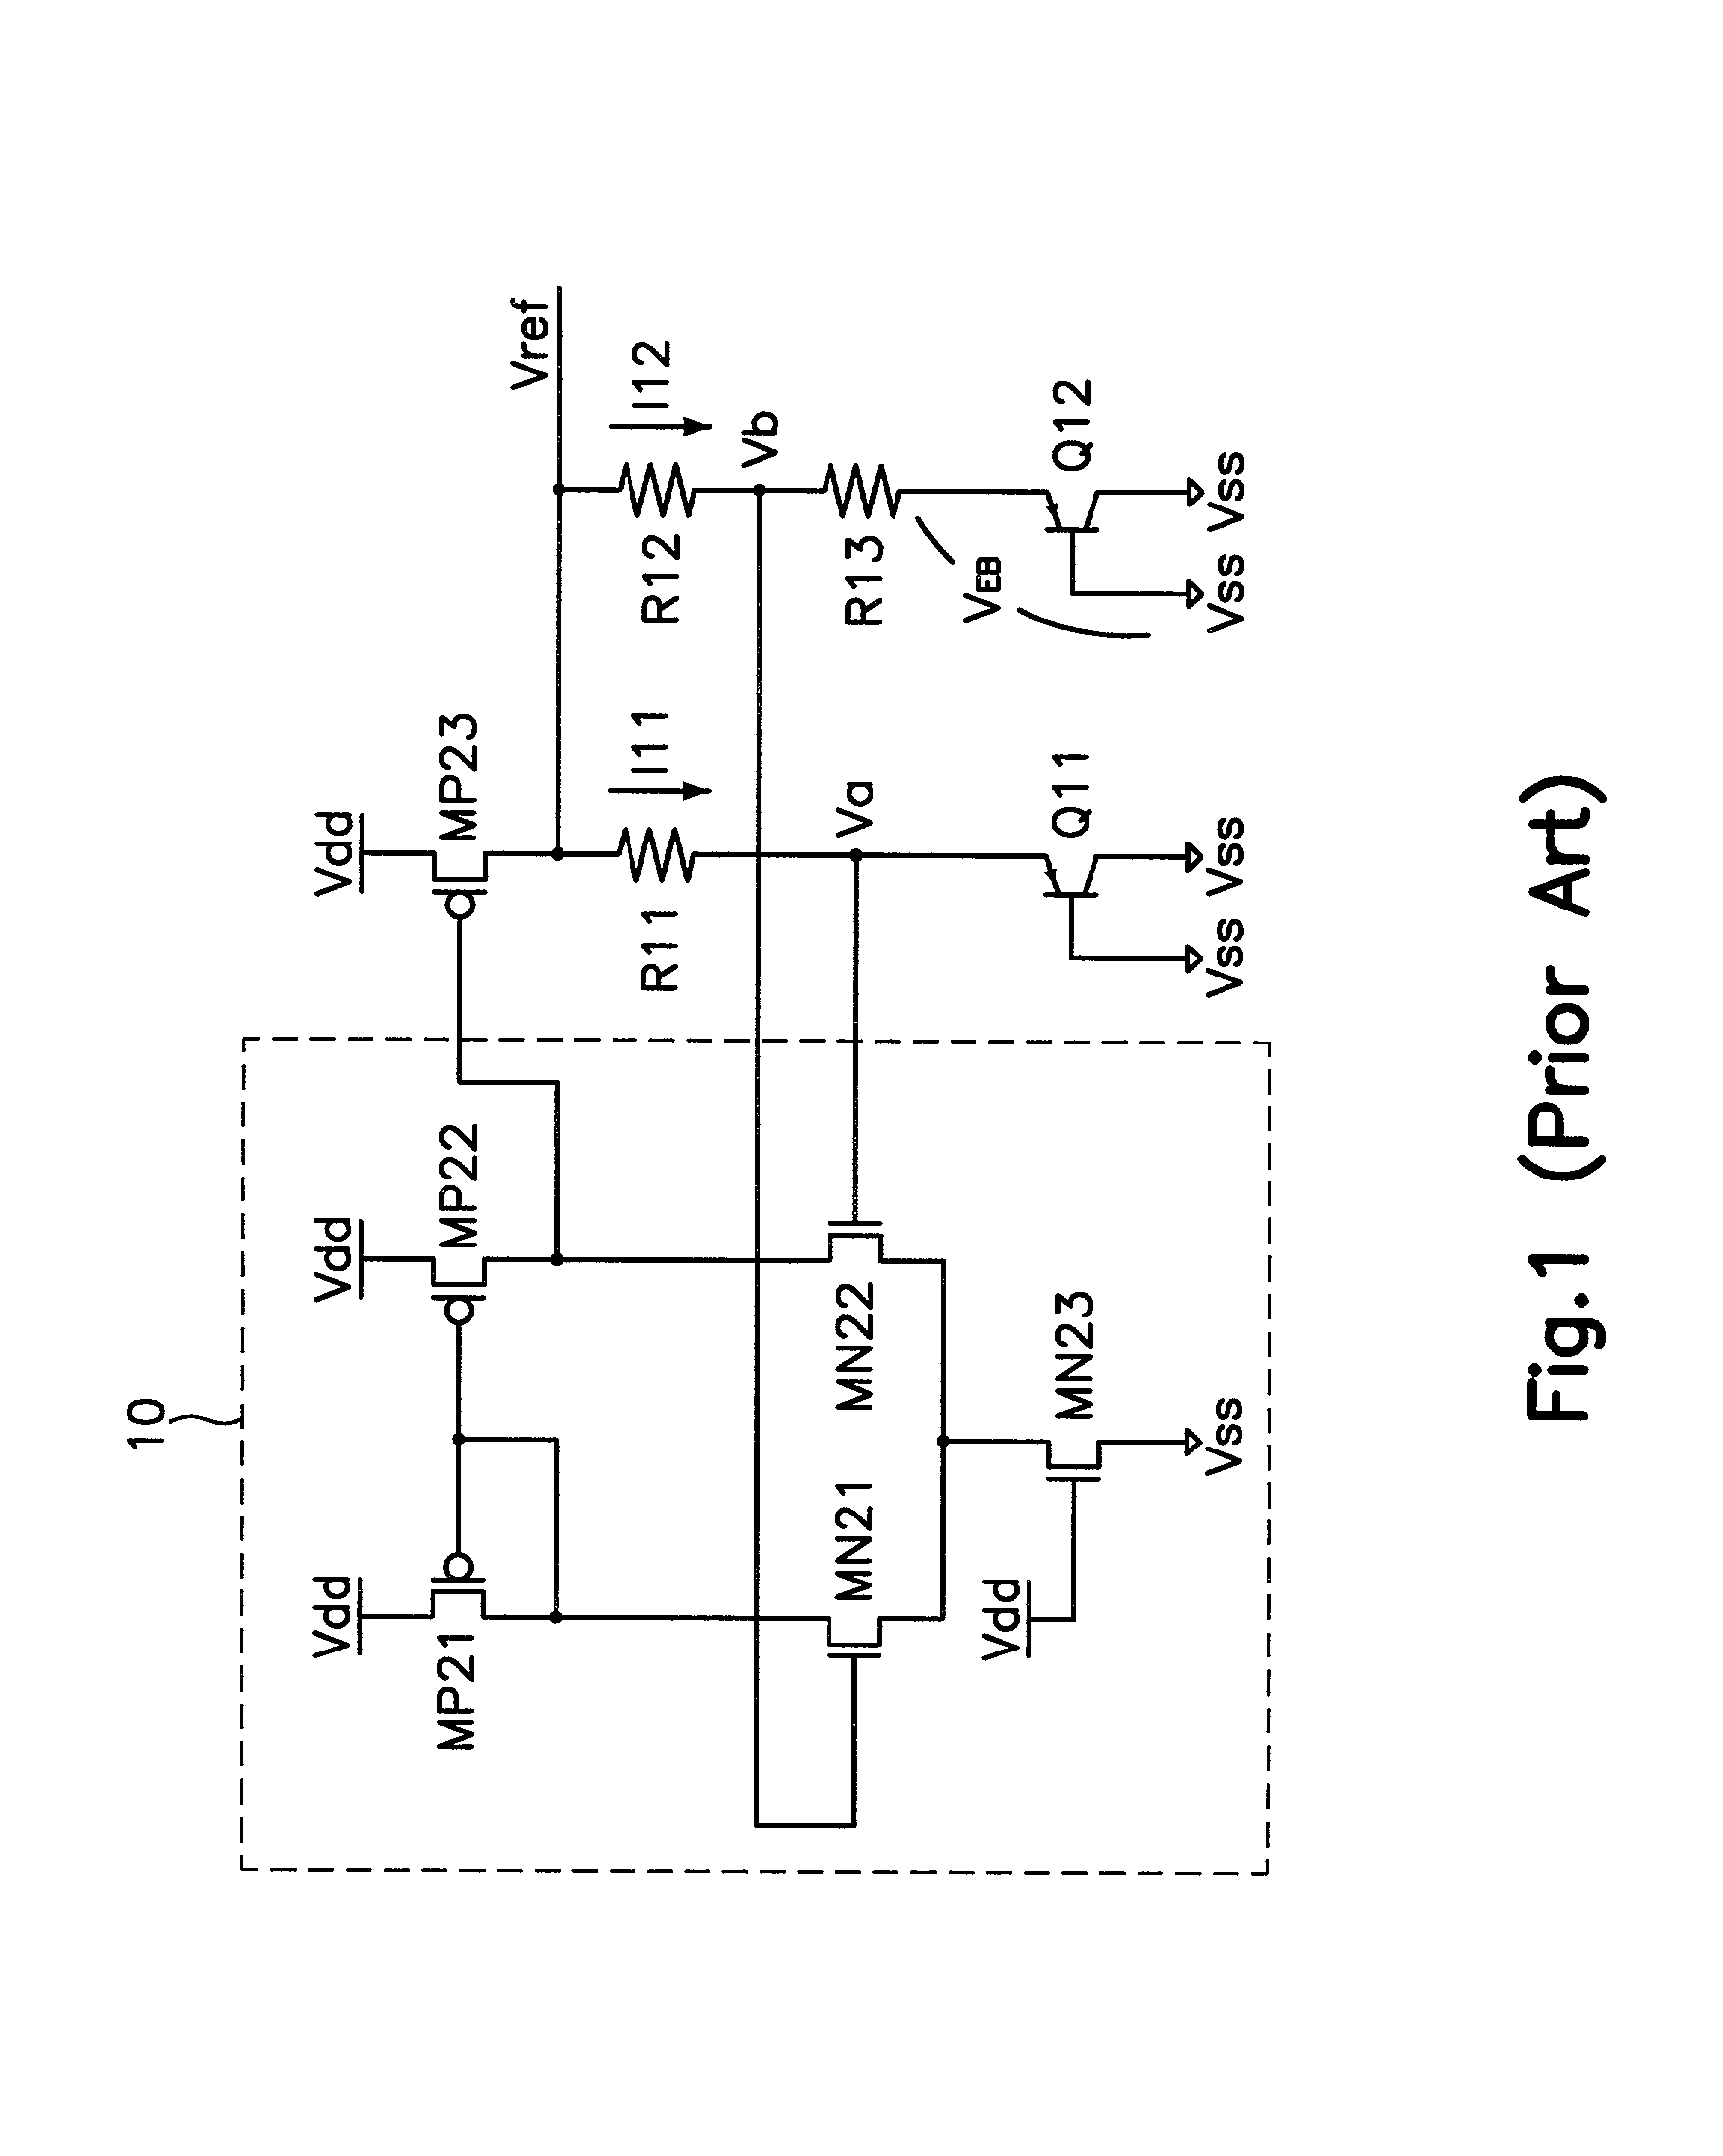 Current mirror type bandgap reference voltage generator